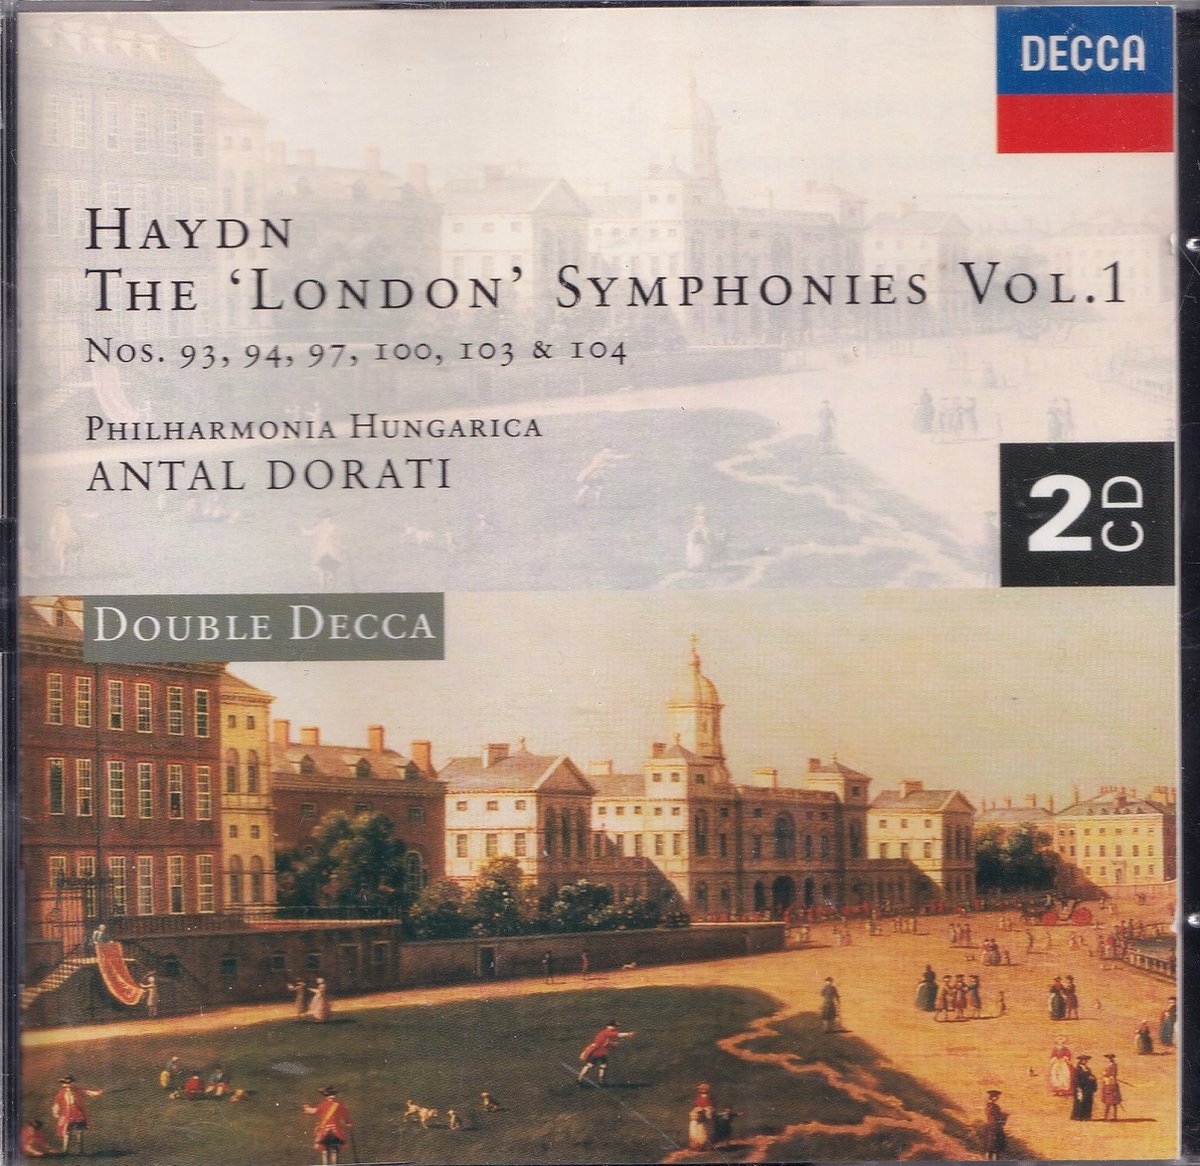 London Symphonies Vol.1 - Philharmonia Hungarica o.l.v. Antal Dorati